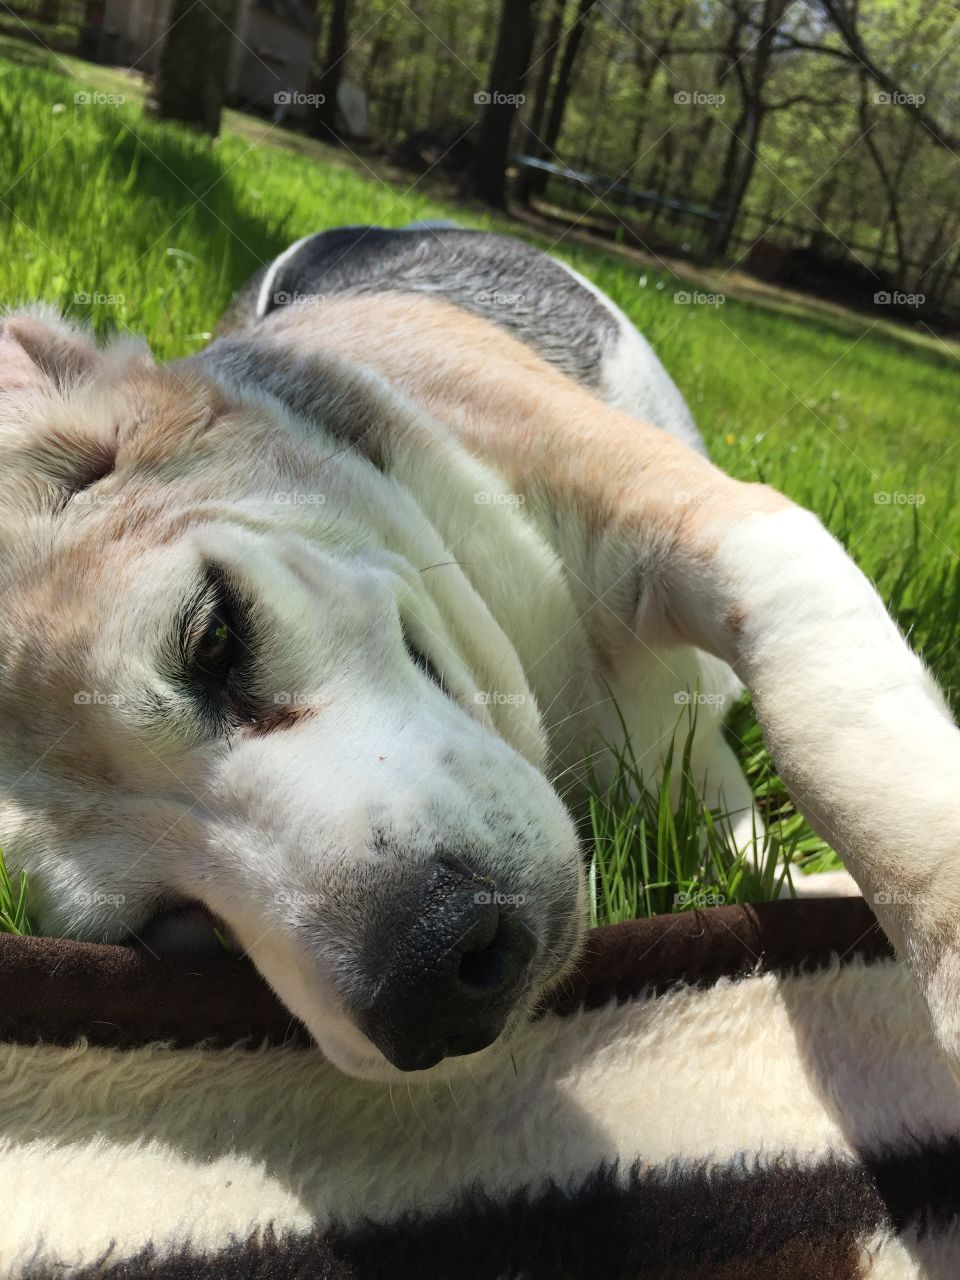 Beagle in grass 